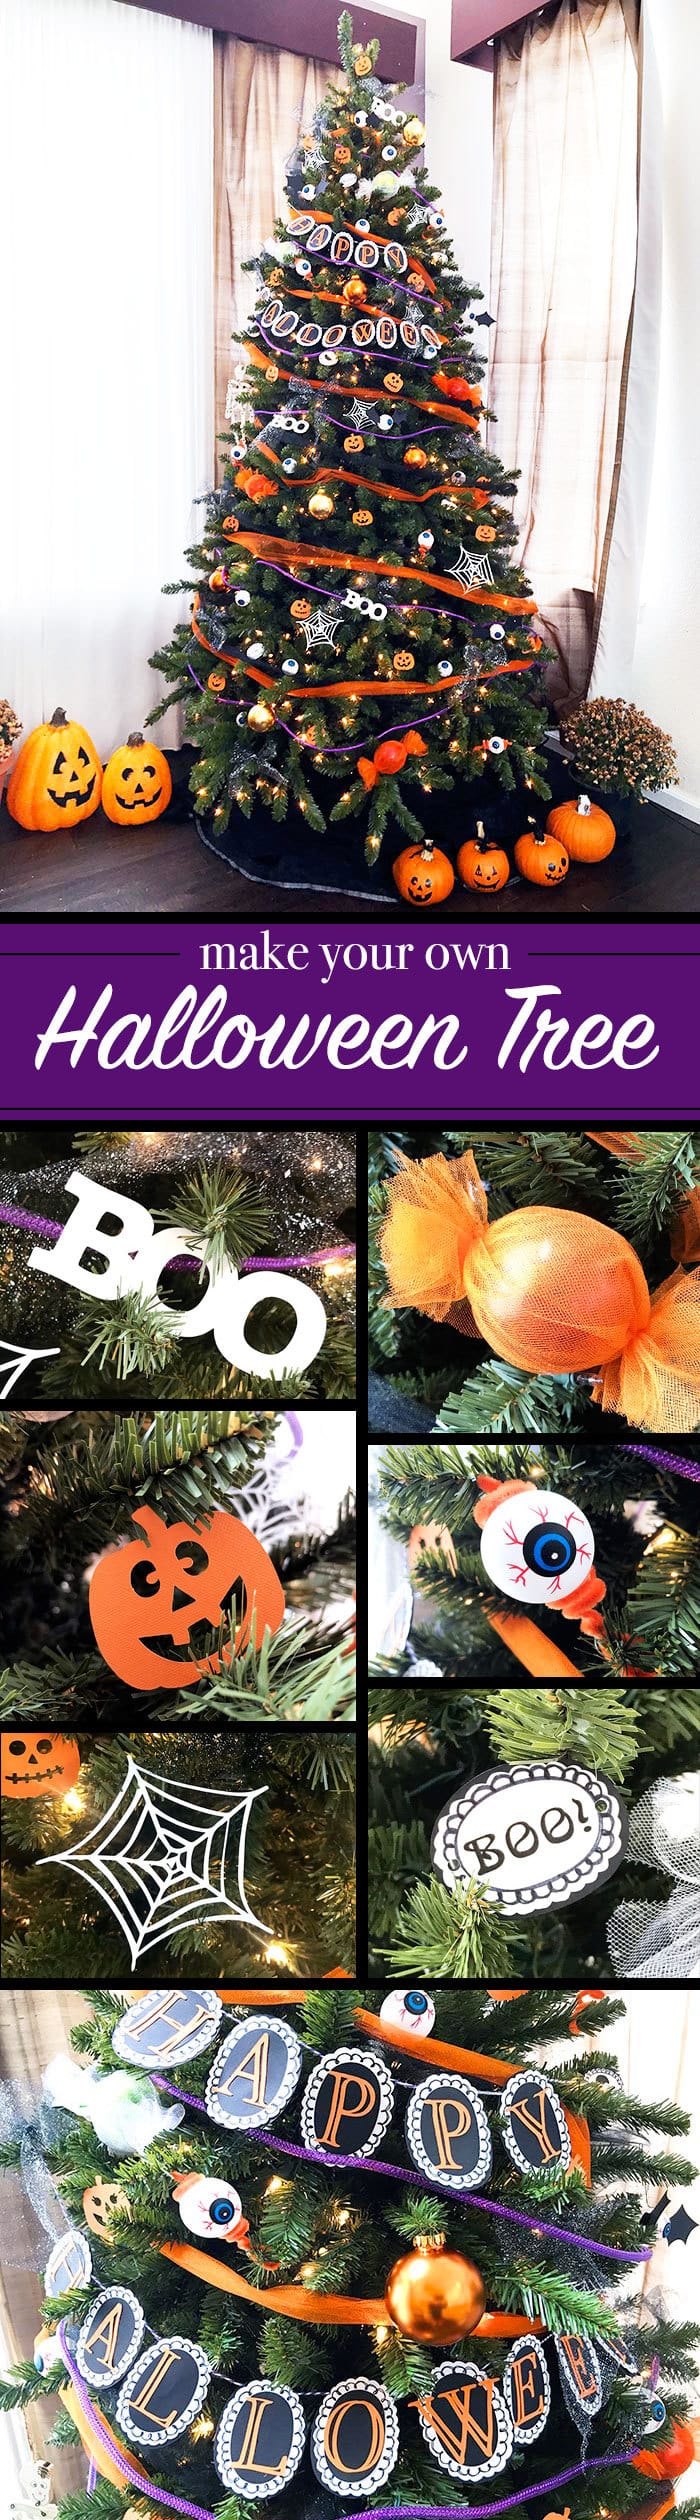 DIY Halloween Tree and Decor - design idea by Jen Goode